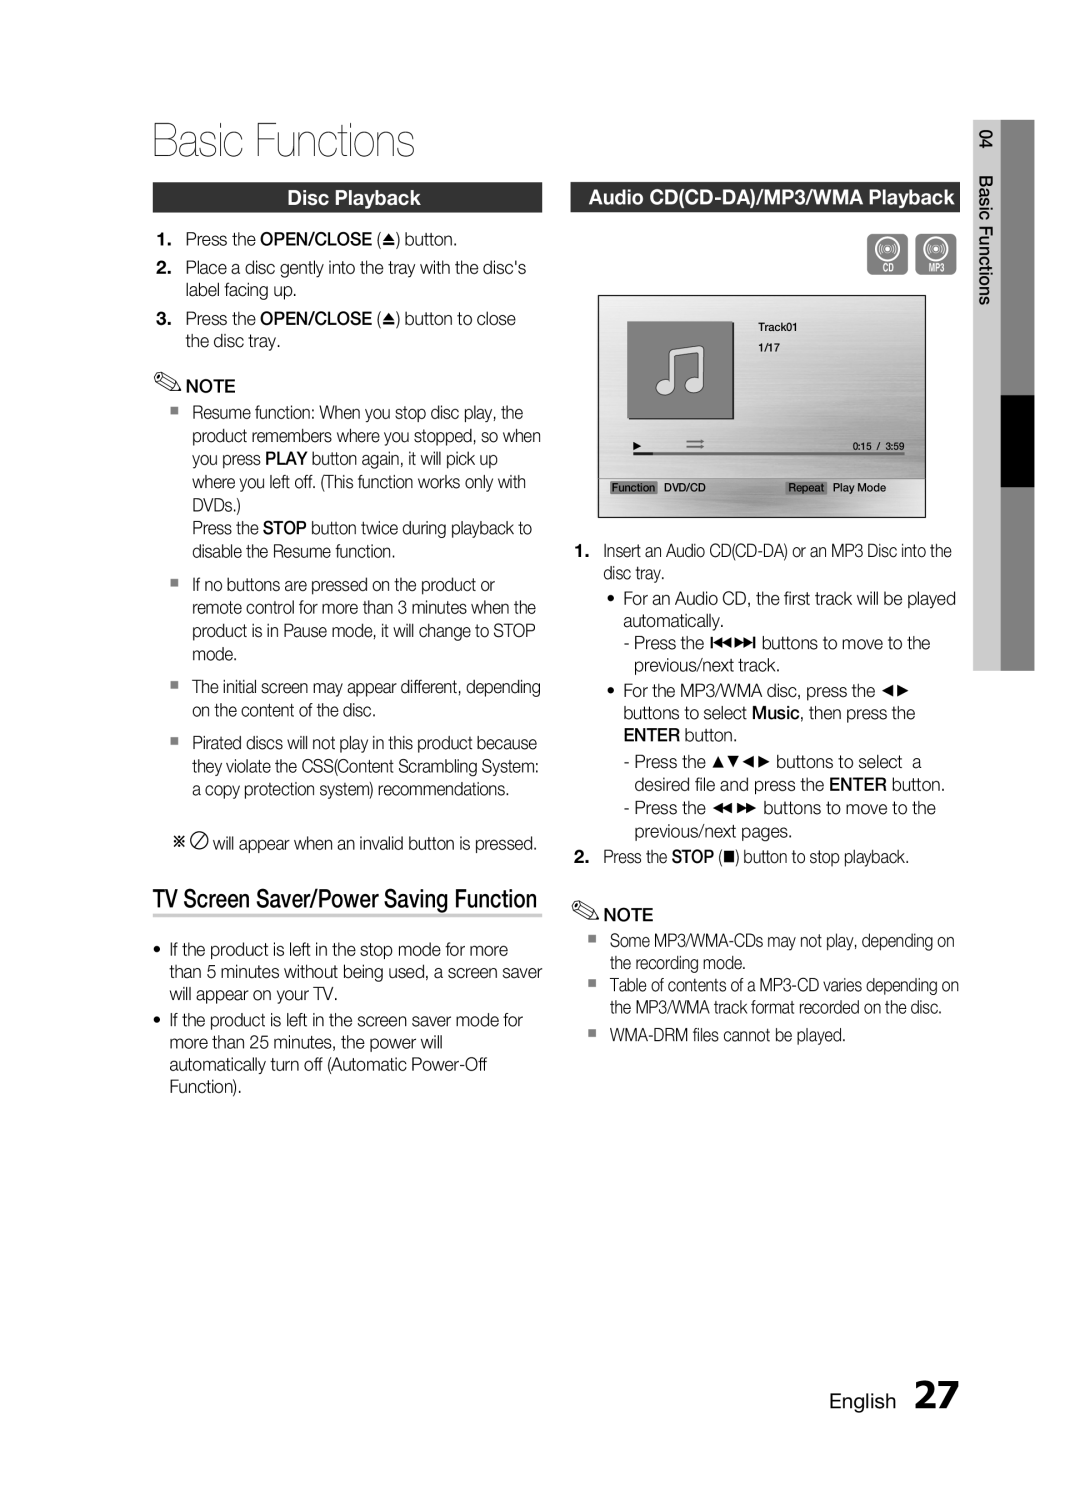 Samsung HT-C453N/UMG Basic Functions, TV Screen Saver/Power Saving Function, Disc Playback, Audio CDCD-DA/MP3/WMA Playback 